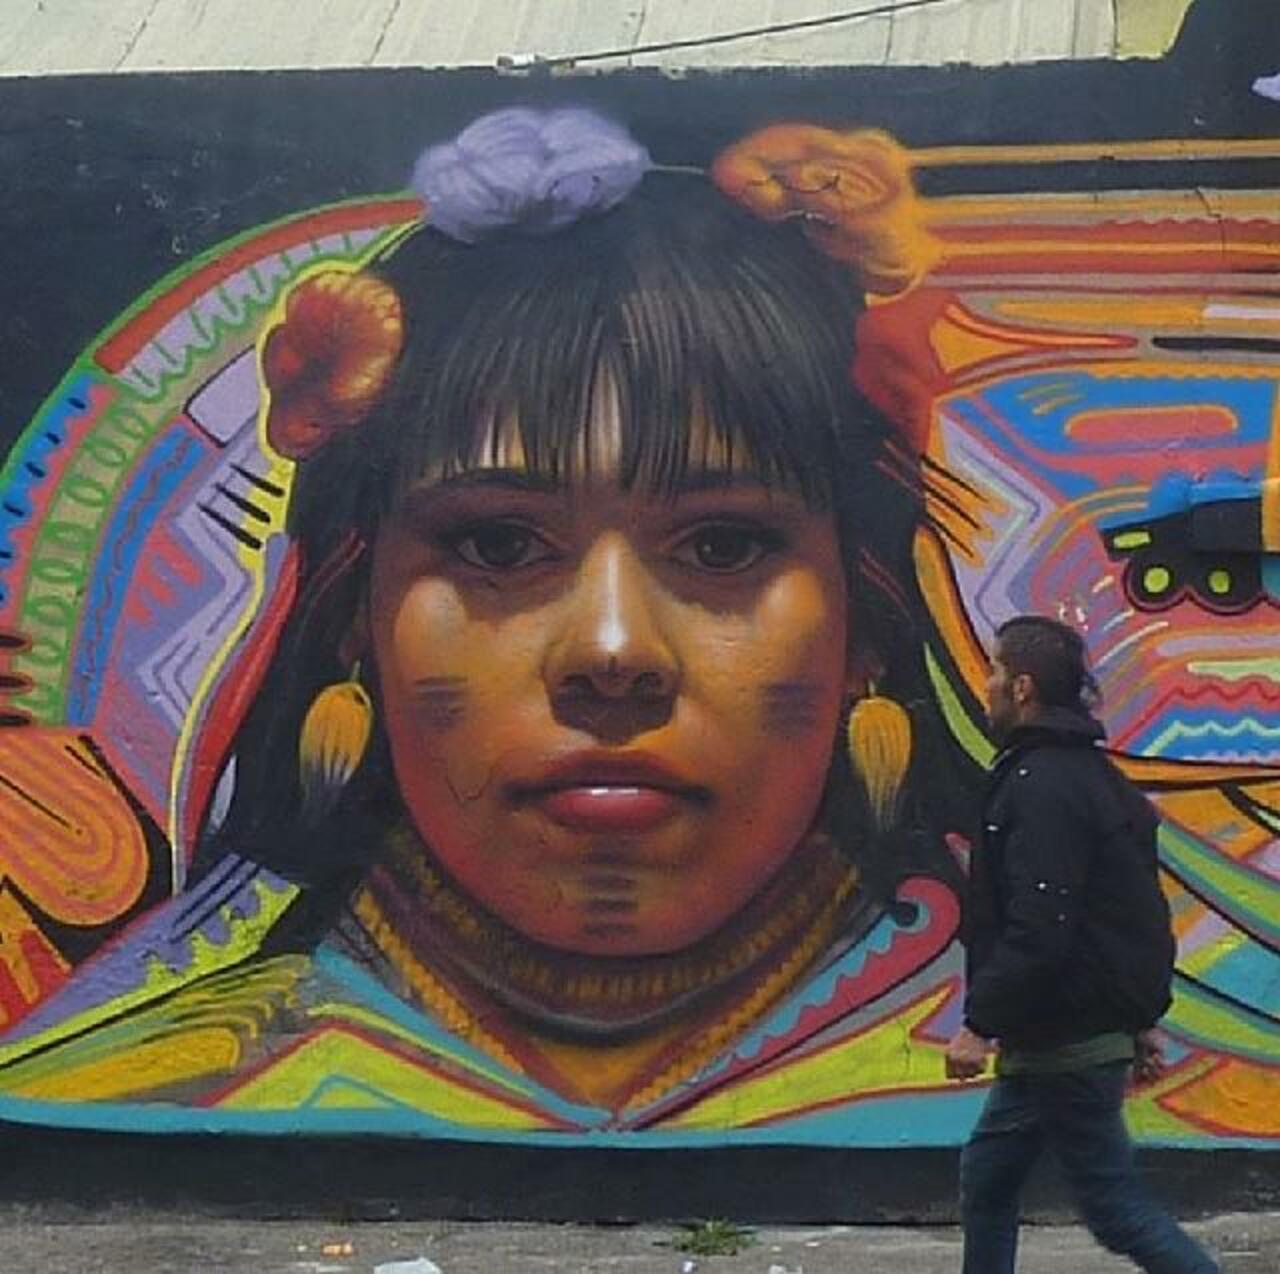 RT @chernysvet: Street Art by the artist Daniel Cortez 

#art #mural #graffiti #streetart http://t.co/ZECuyOQWE3